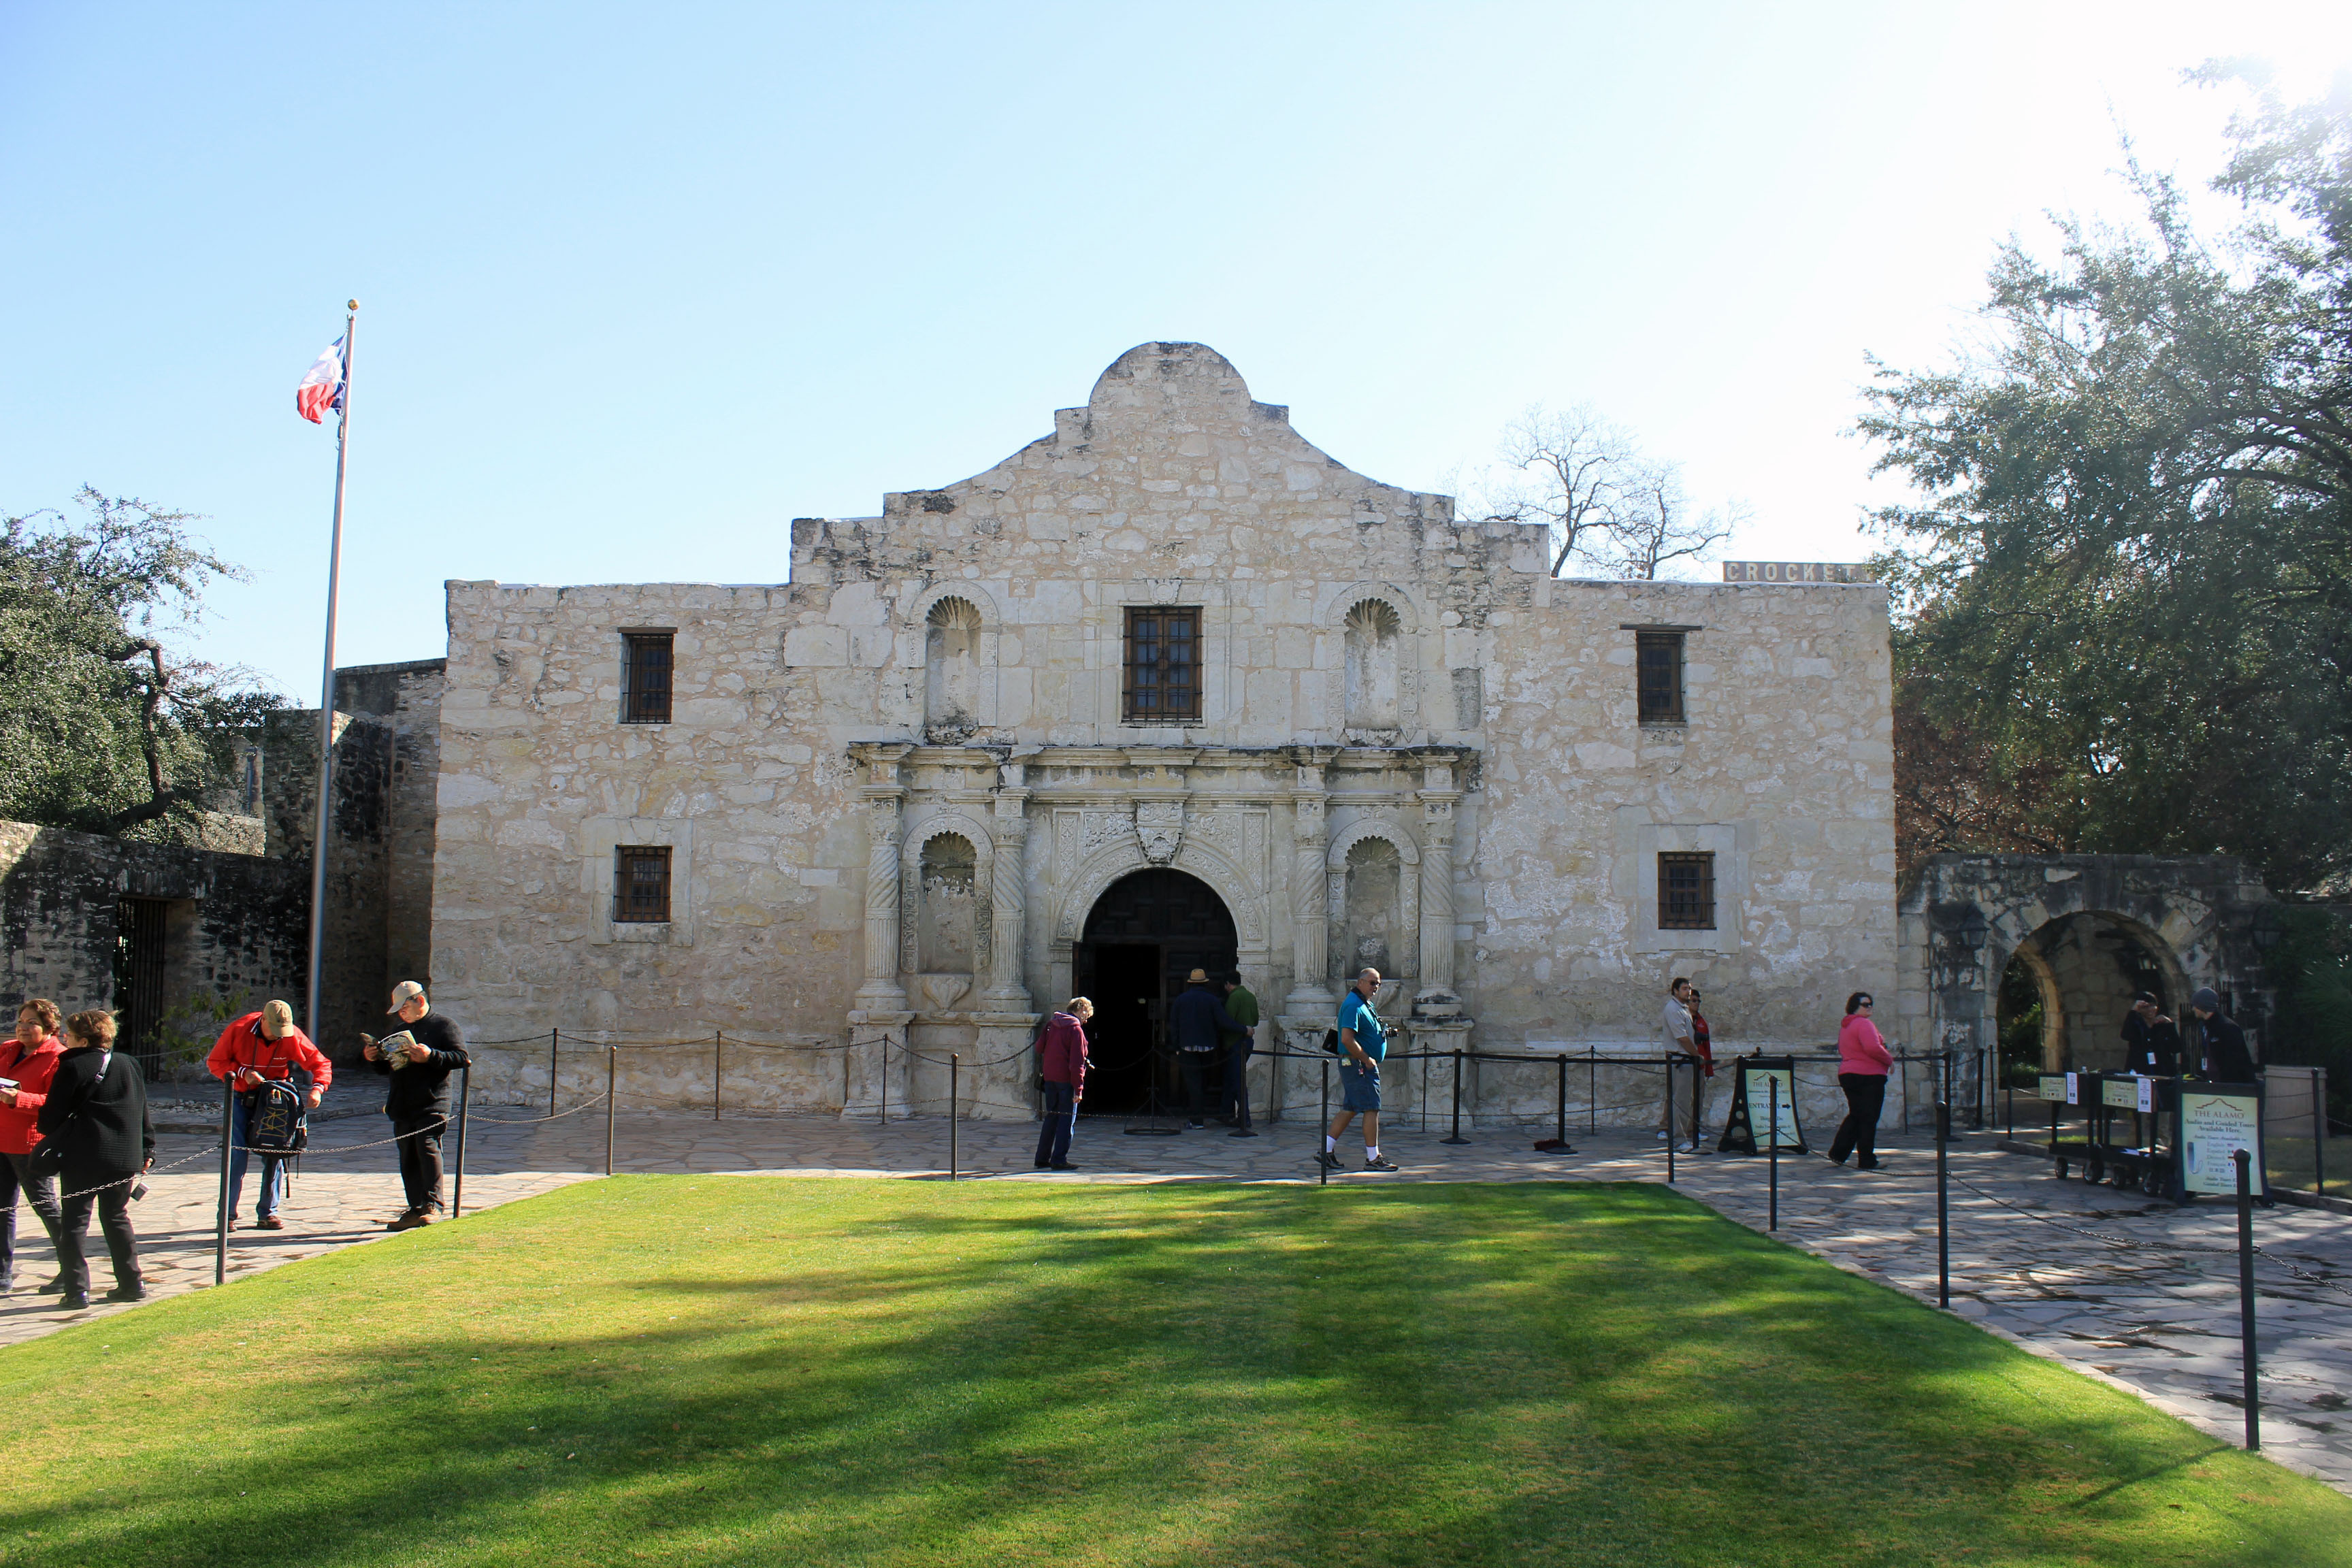 The Alamo